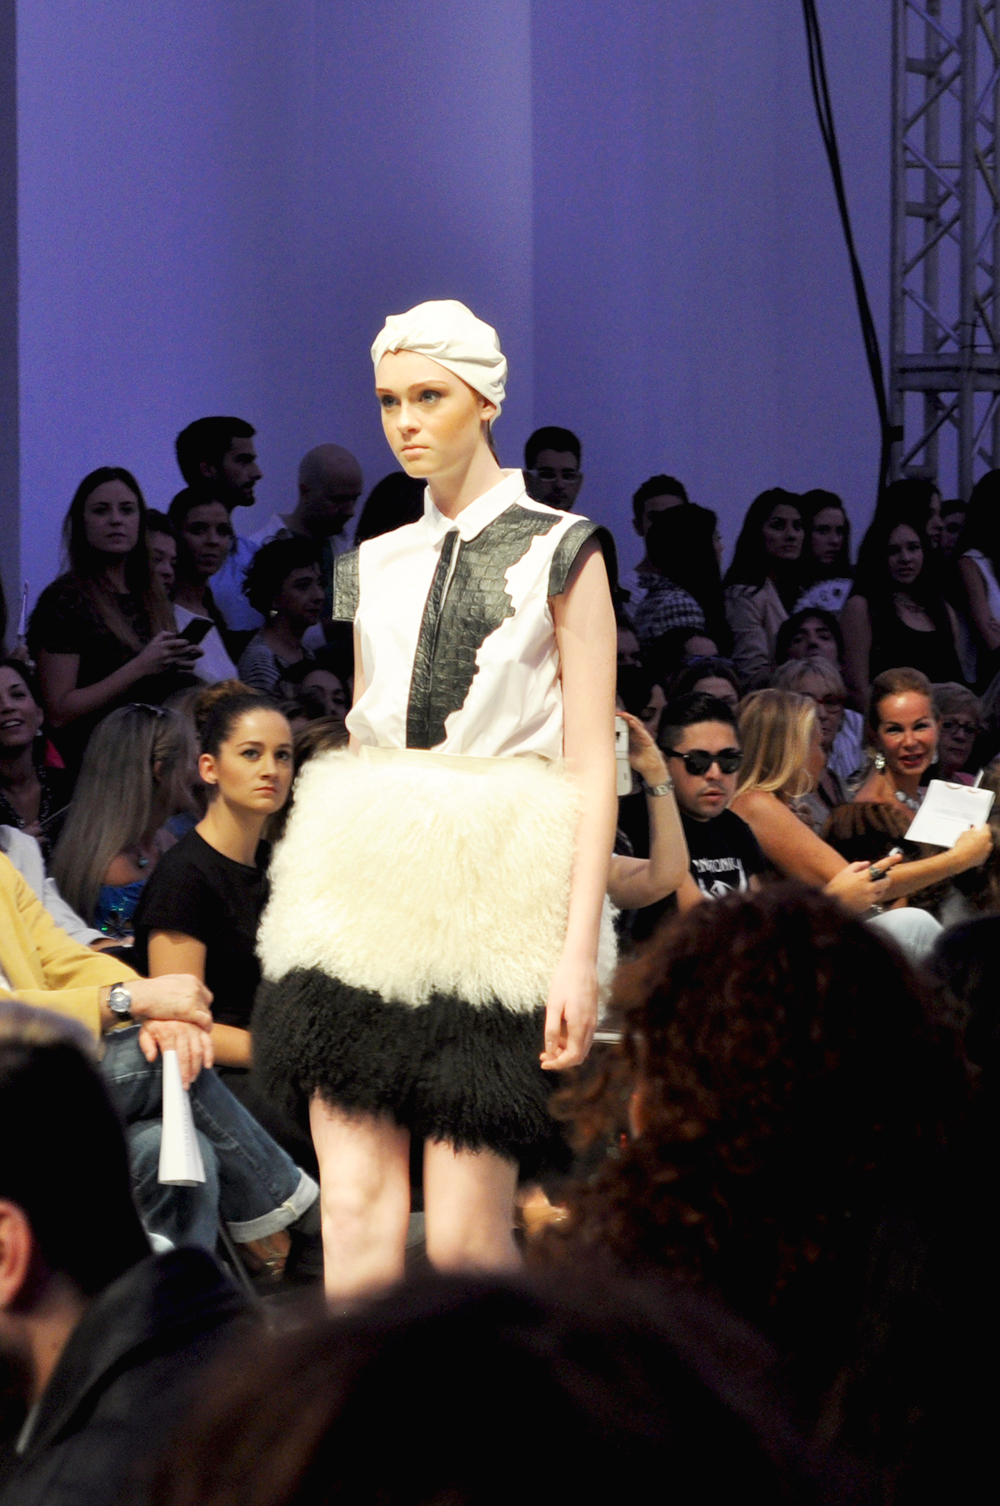 GS ESSENCE'S LIVE gabriel seguí peletería XVII Valencia Fashion week, something fashion blogger spain leather fur design show catwalk, vfw 17 museo del carmen